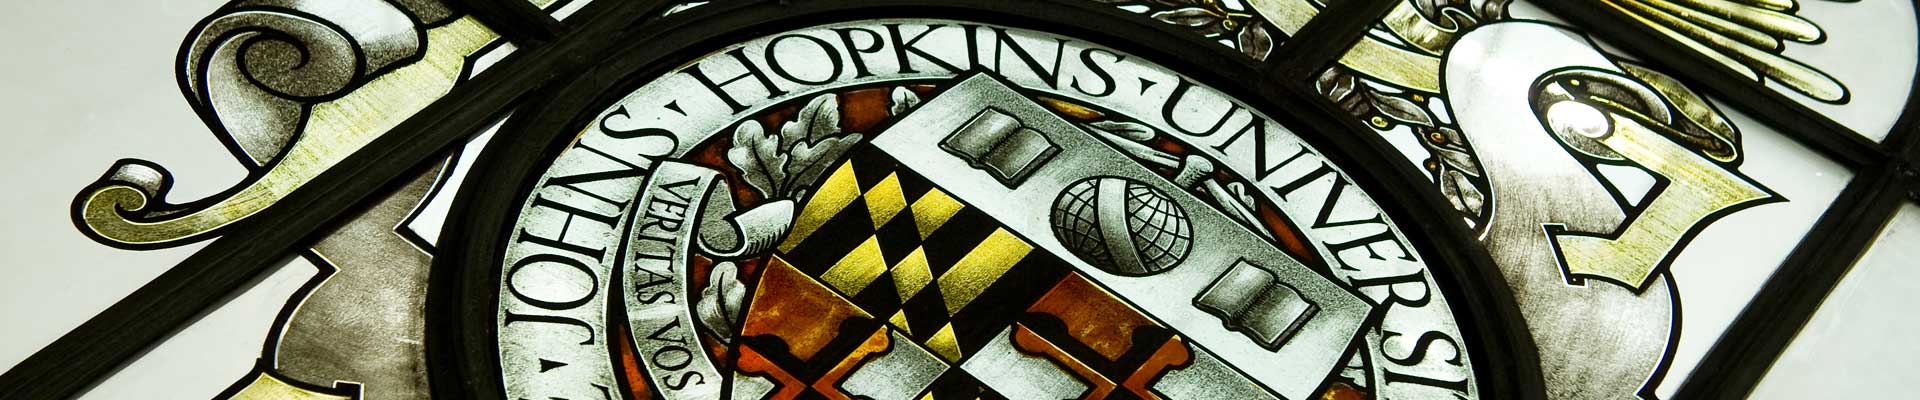 Johns Hopkins University Shield